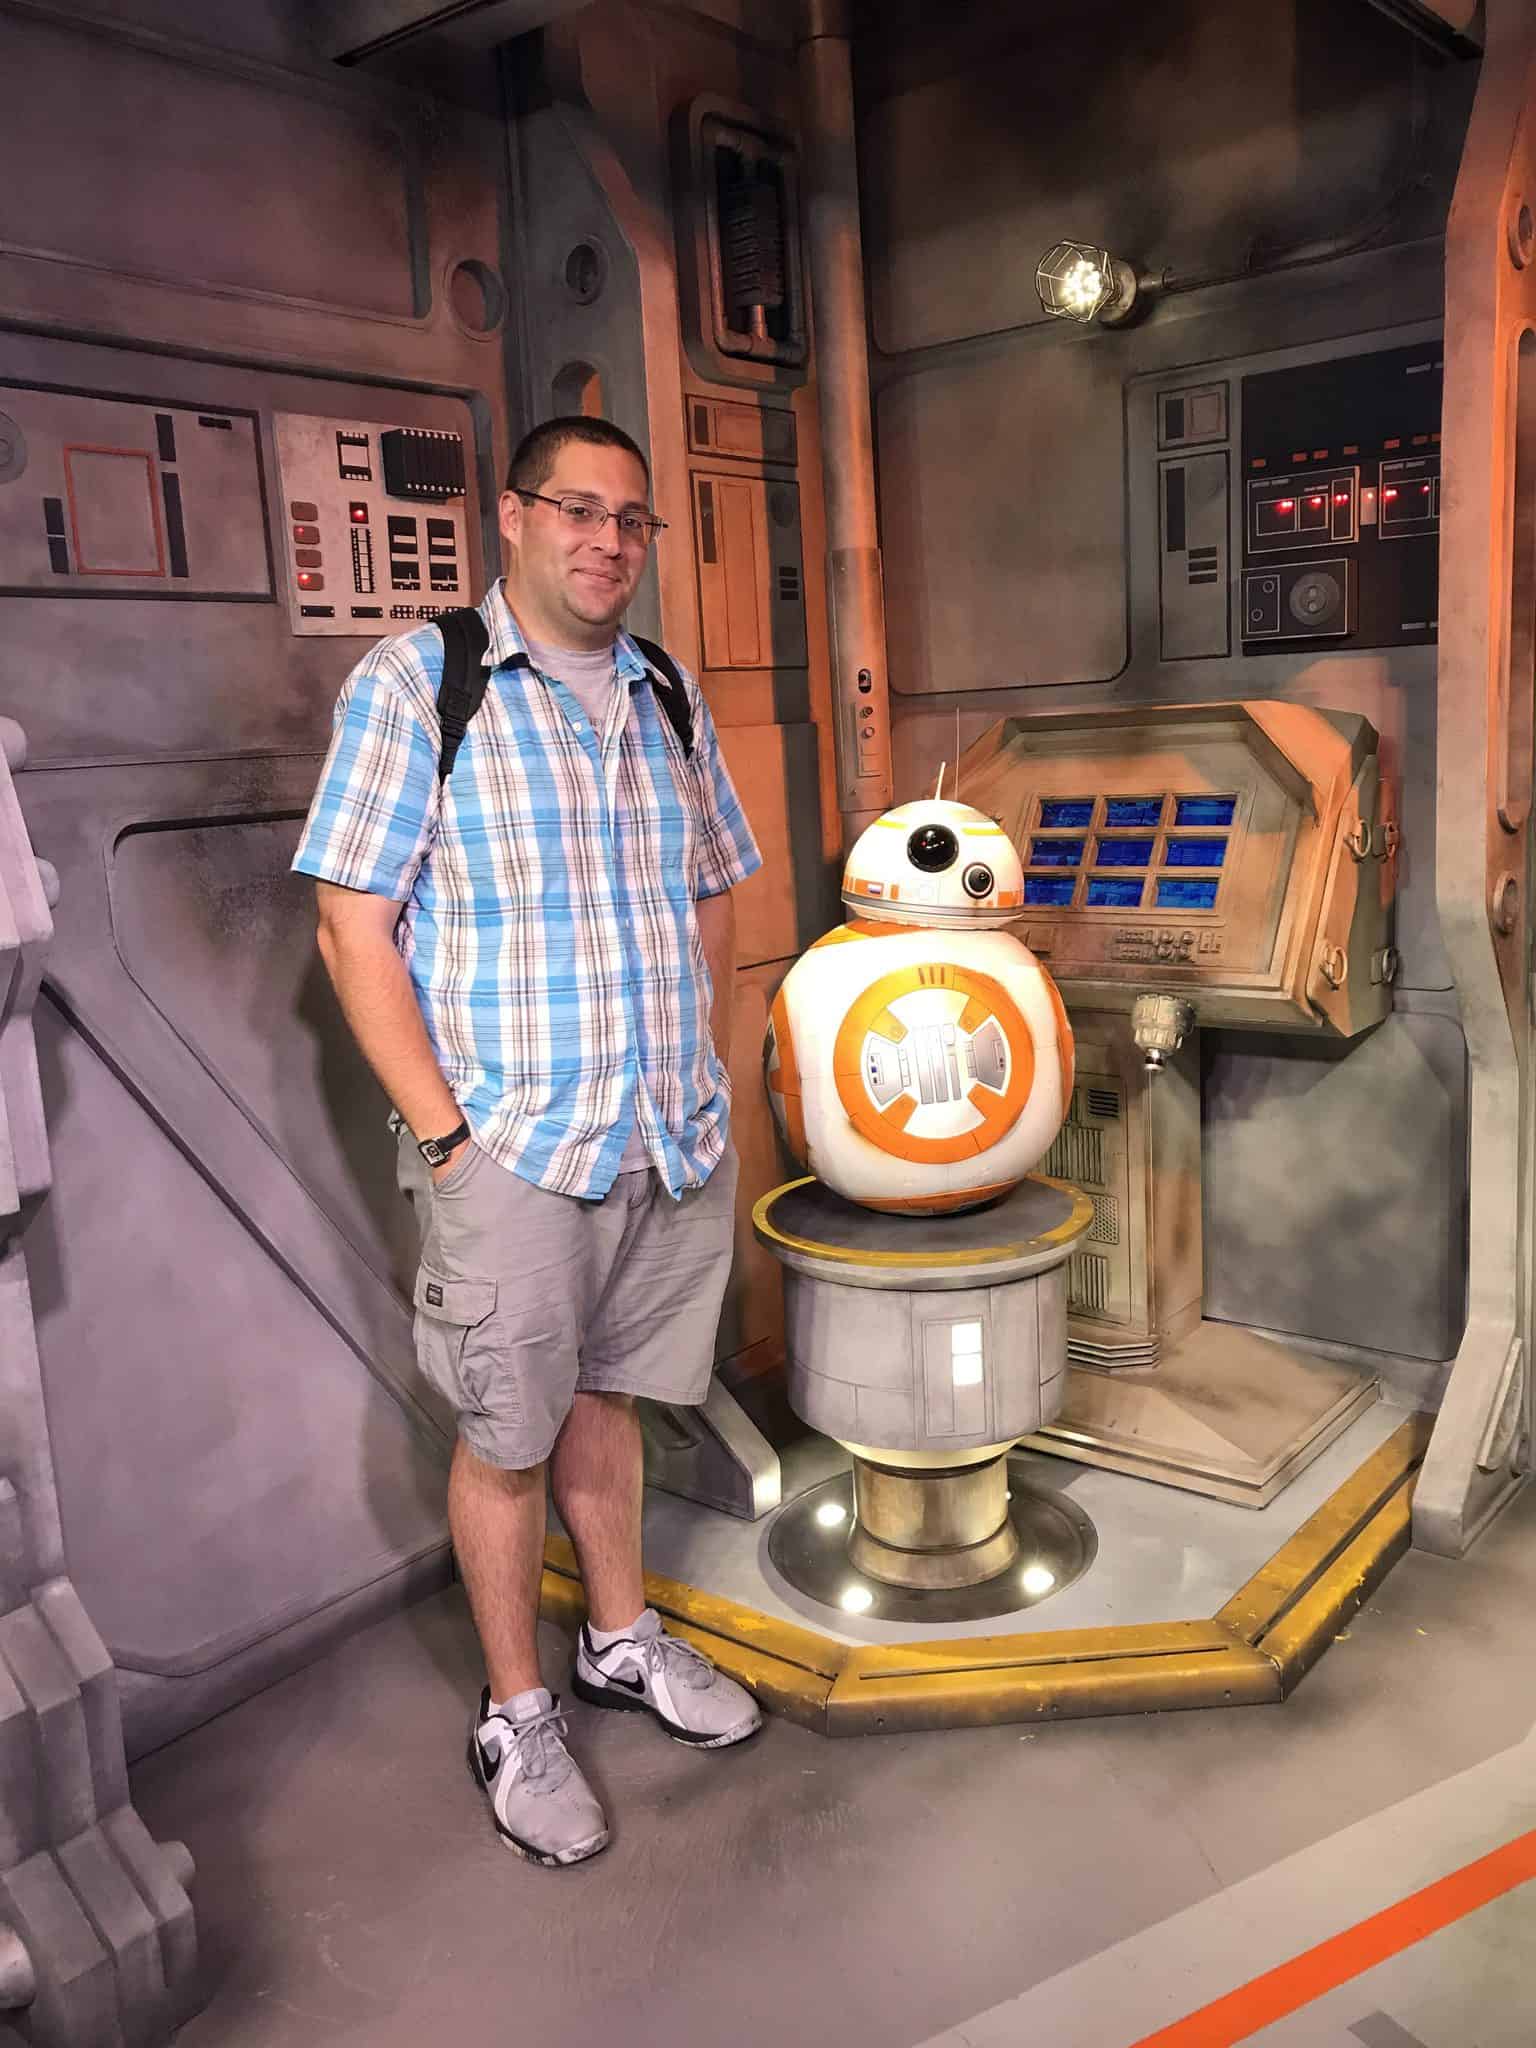 PHOTOS, VIDEO: Star Wars BB-8 Living Character Meet and Greet Debuts Early at Disney's Hollywood Studios